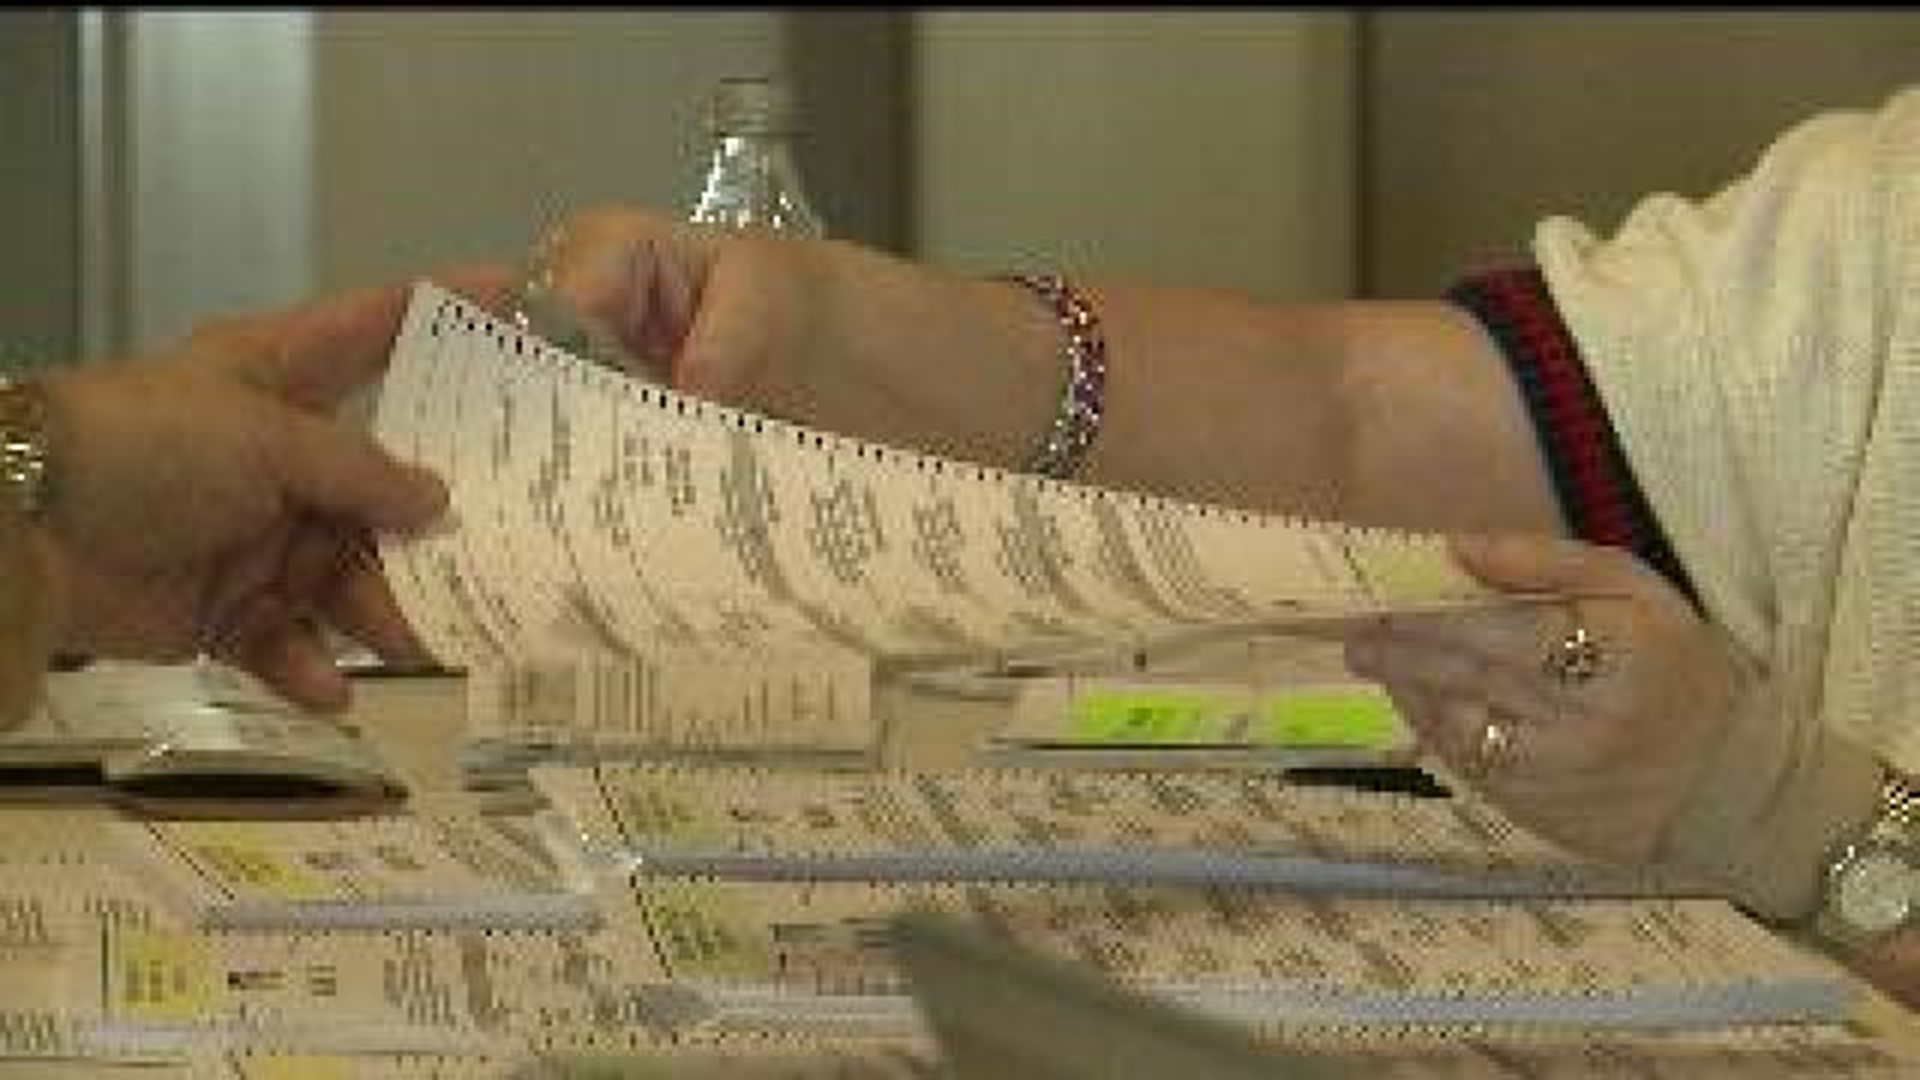 Some Democrats voting a Republican ticket in effort to sway governor vote